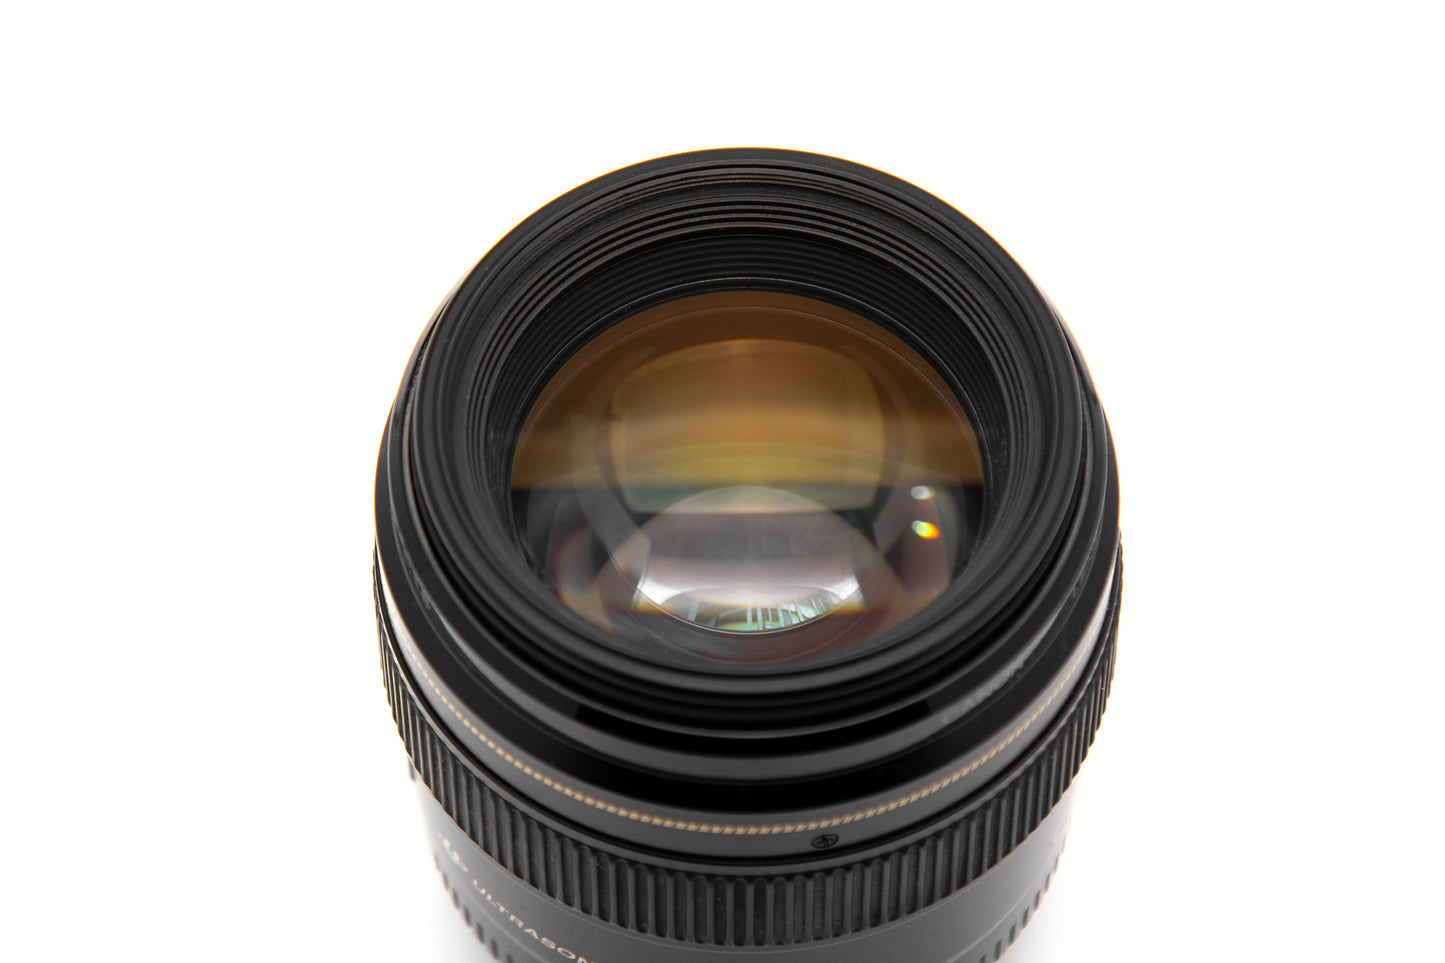 Used Canon EF 85mm f/1.8 USM Lens